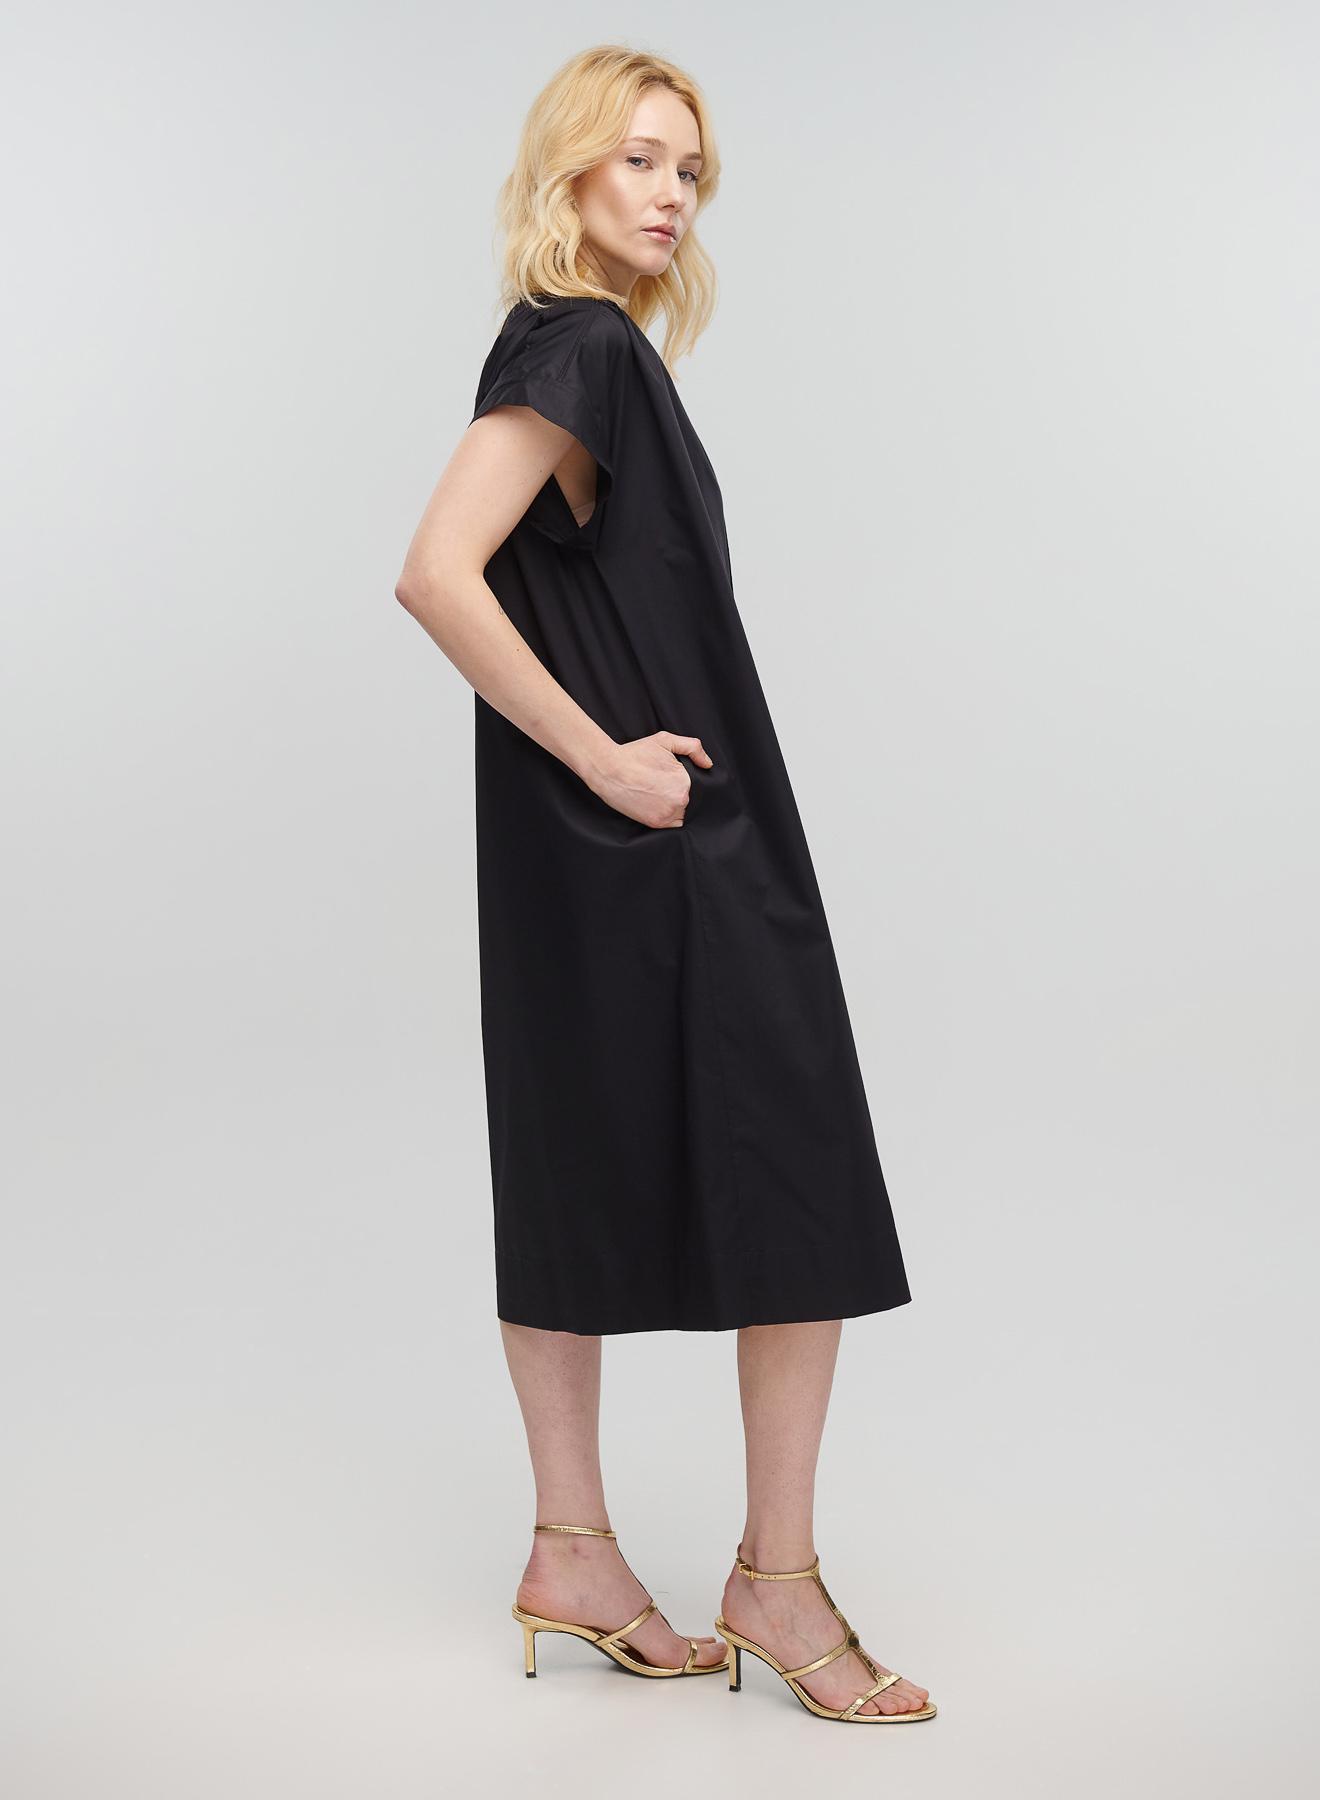 Black long sleeveless Dress with V neckline, belt and front slit Milla - 4